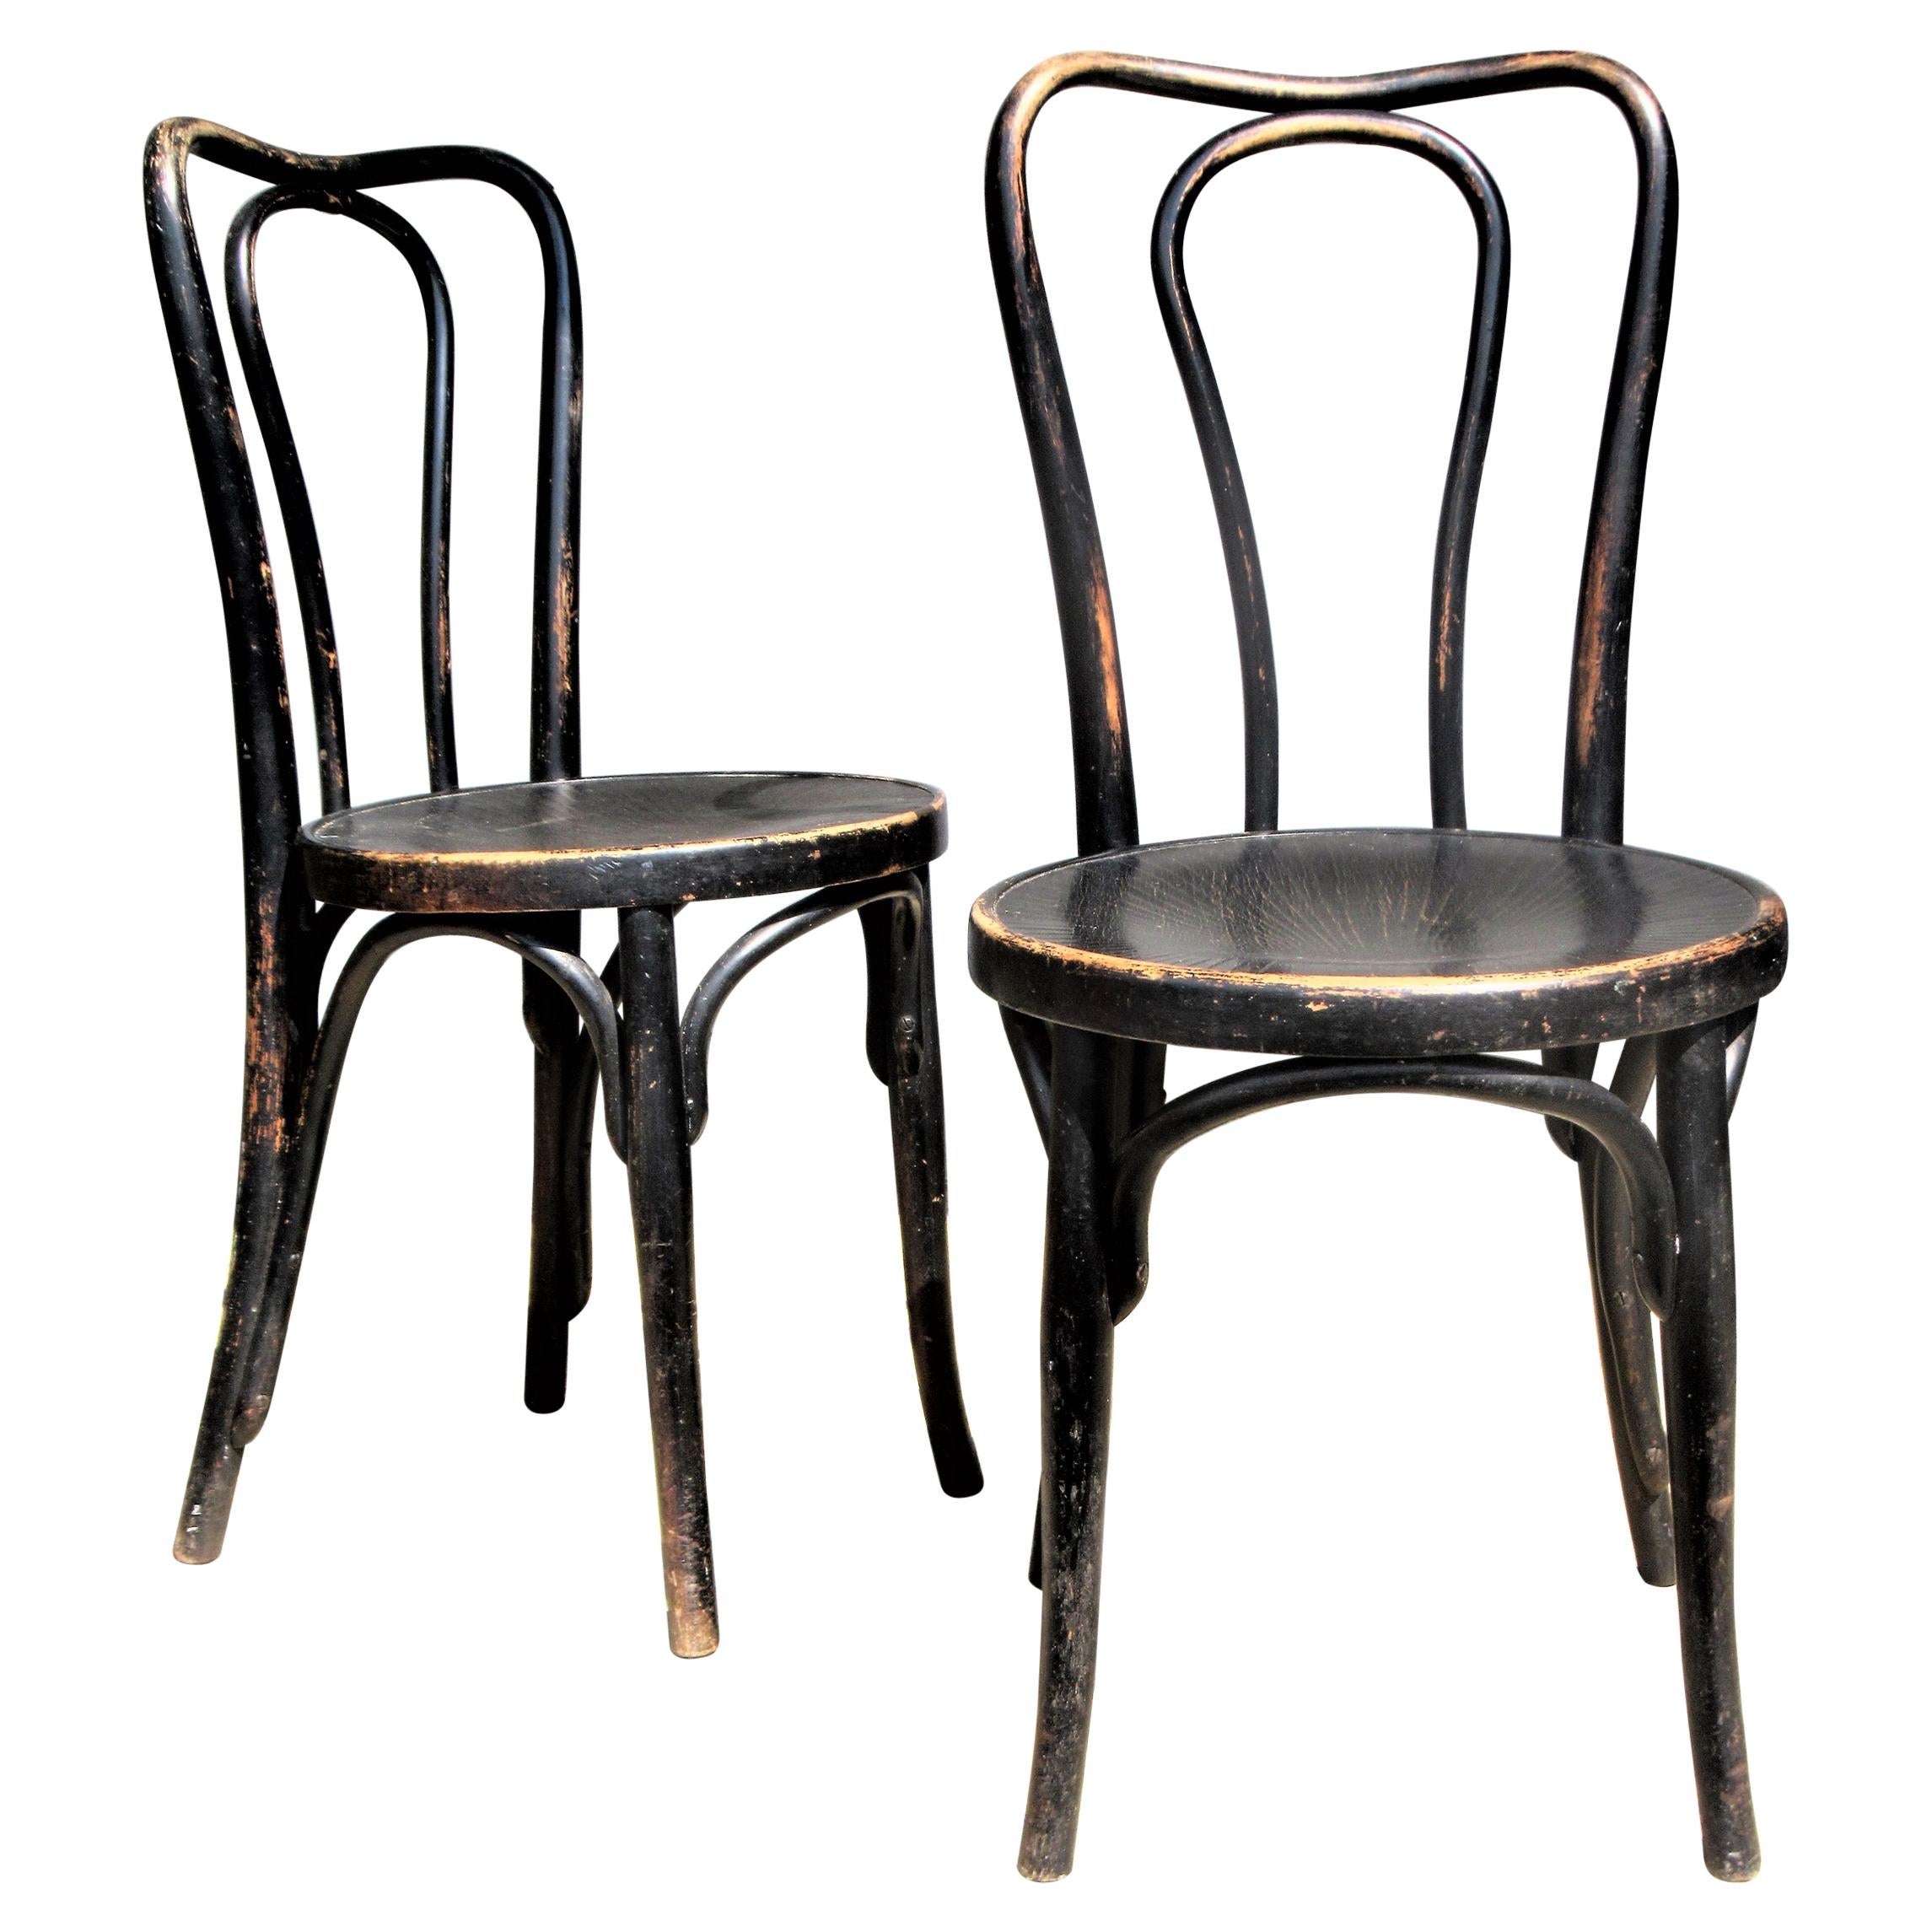  Ebonized Bentwood Chairs by J & J Kohn and Mundus